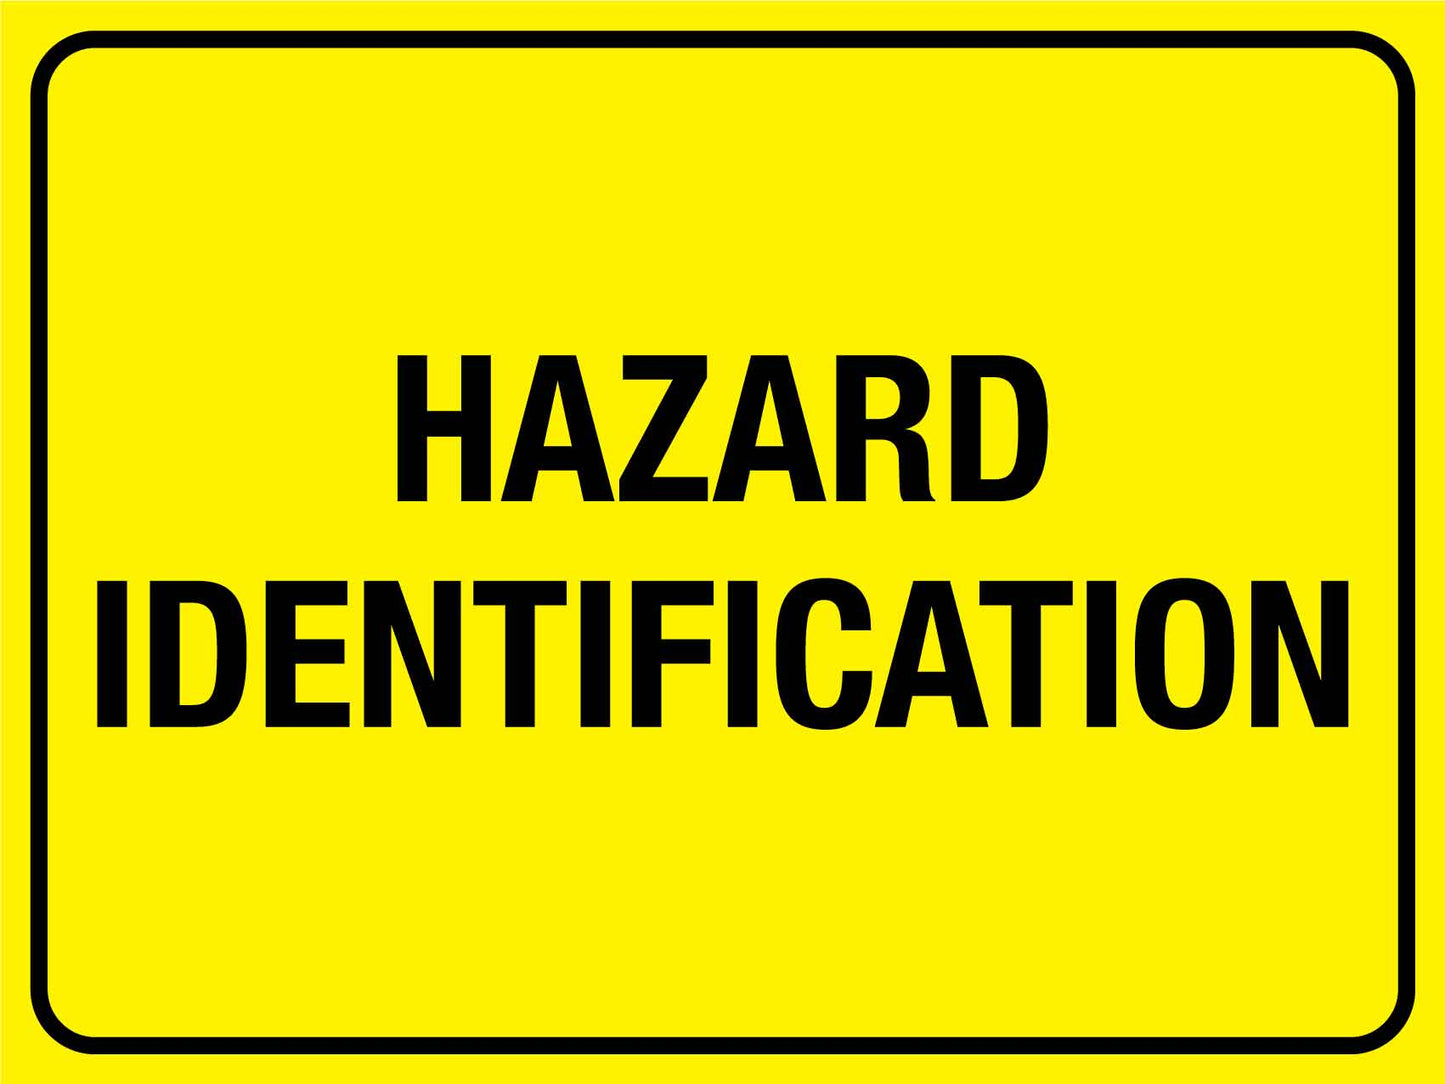 Hazard Identification Sign